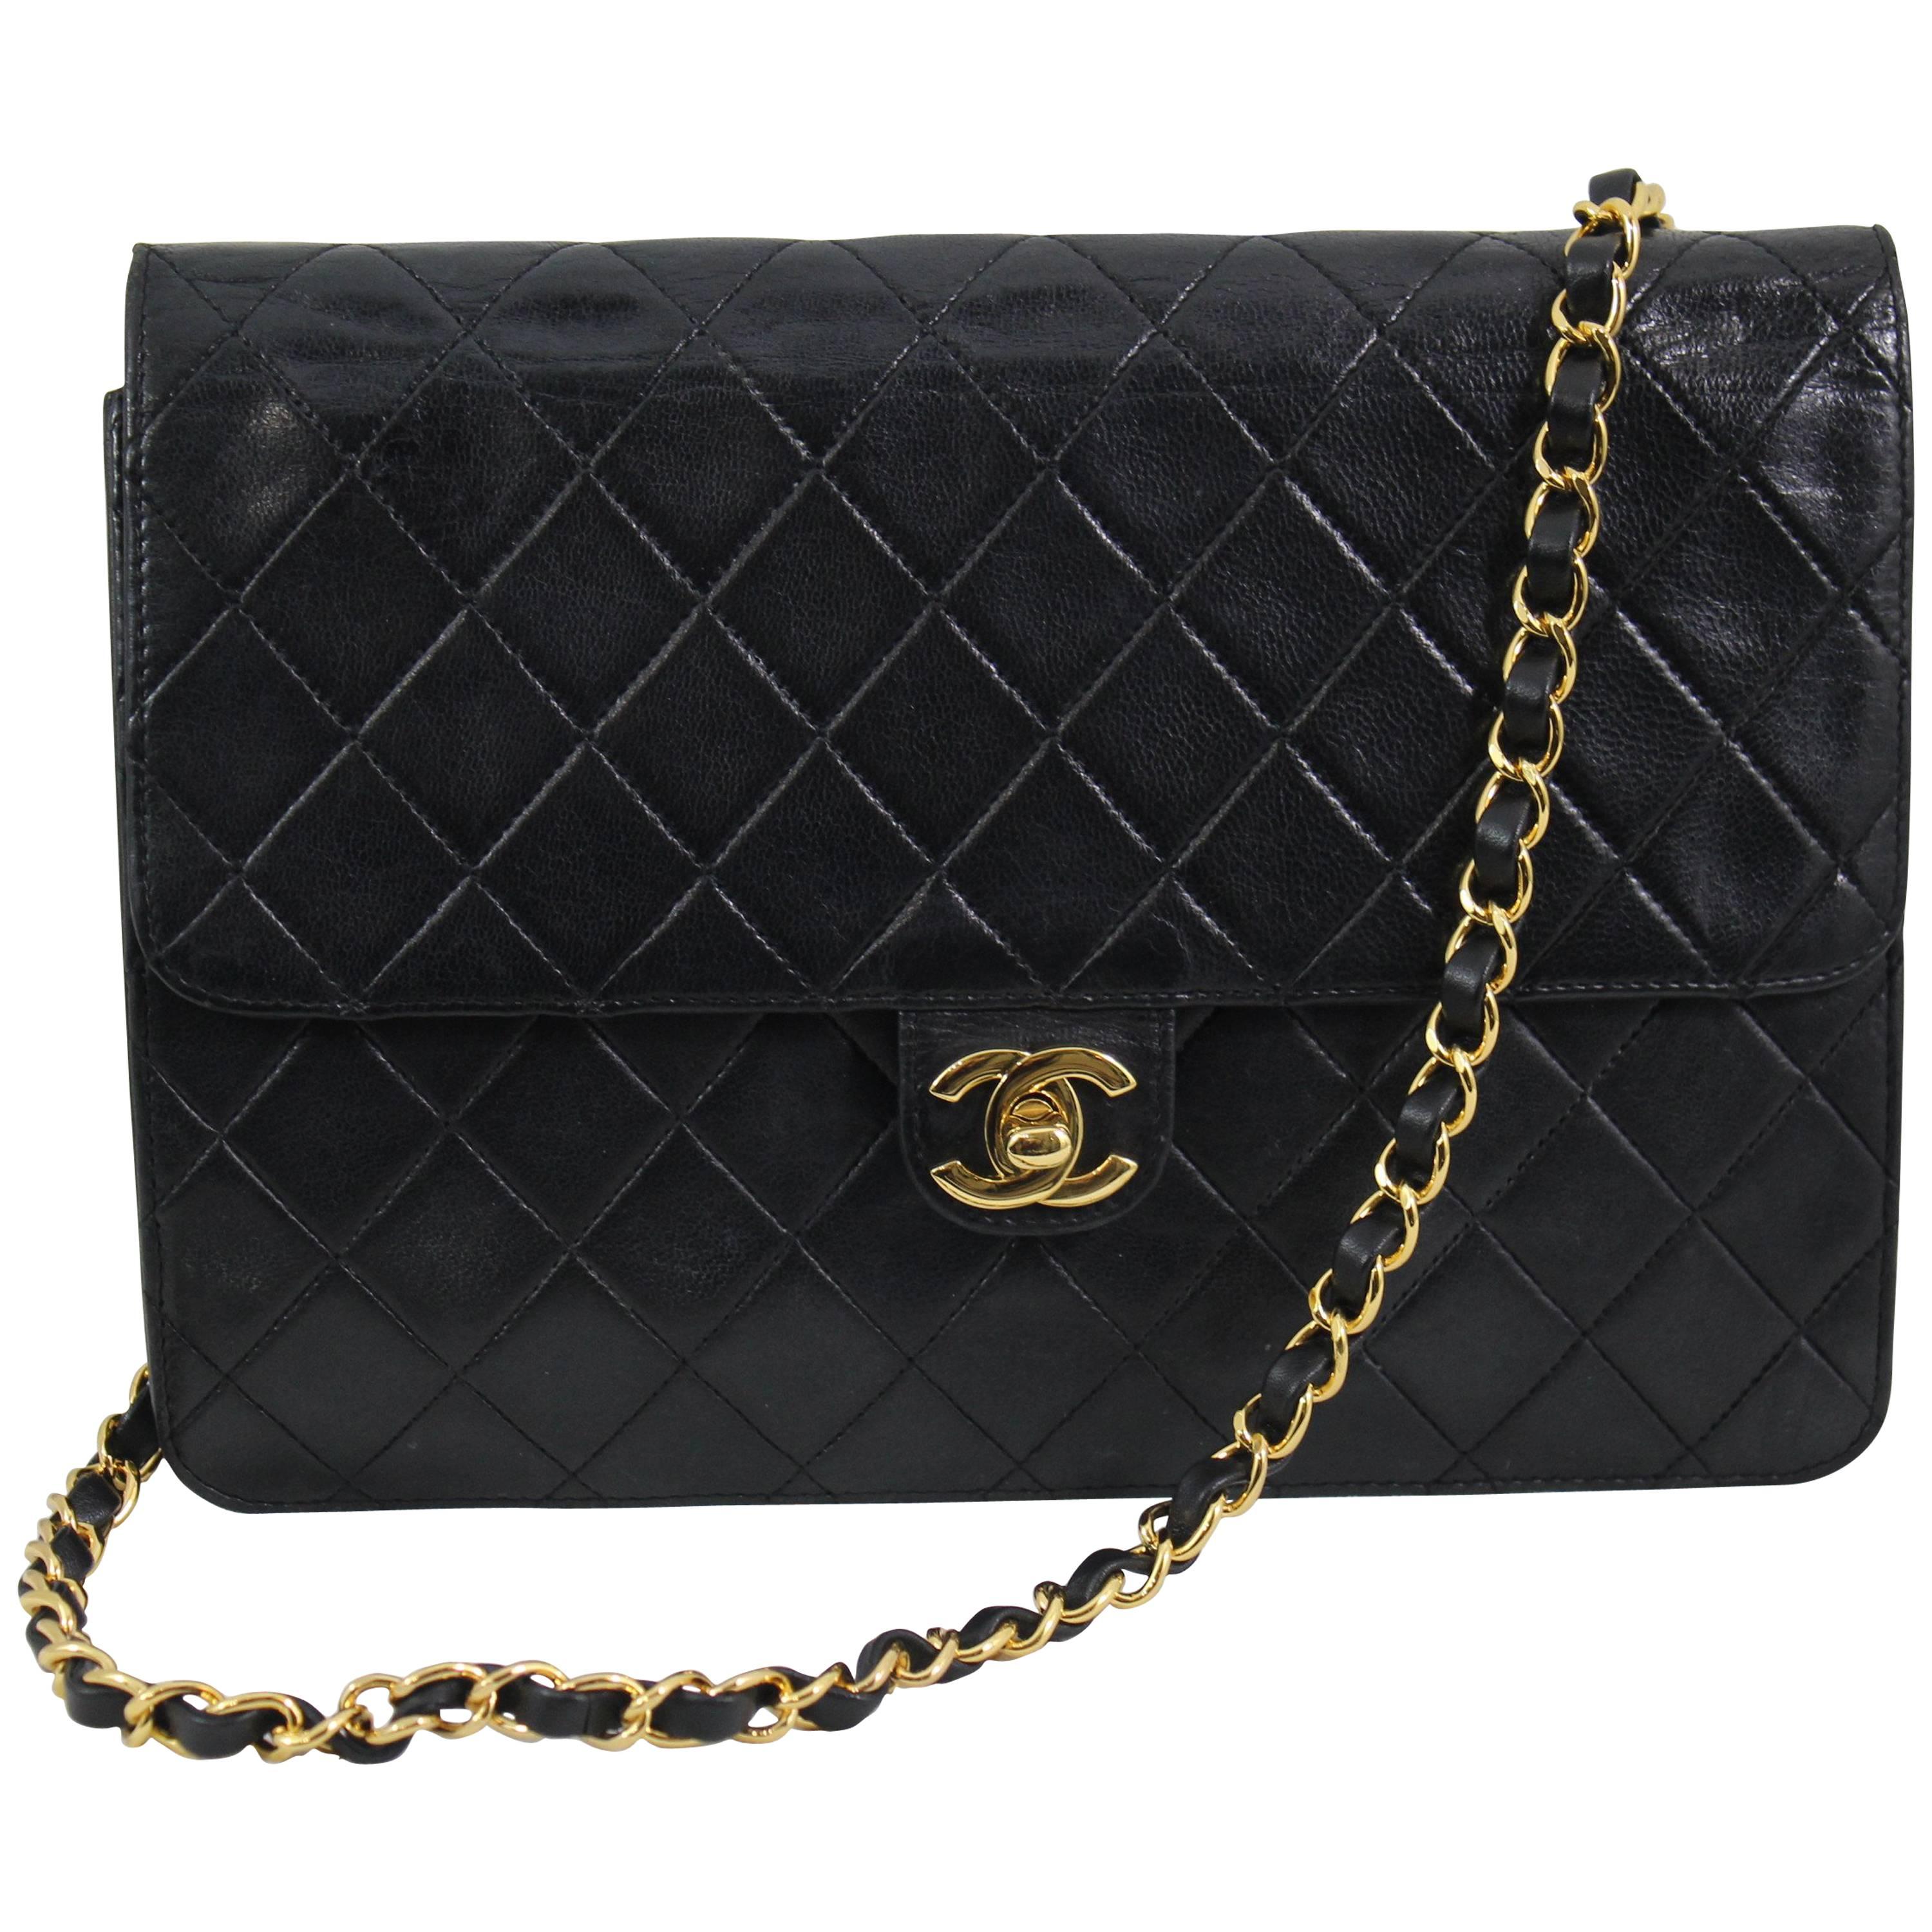 Vinatge Chanel Black Leather Shoulder Bag. New Clasp and chain For Sale